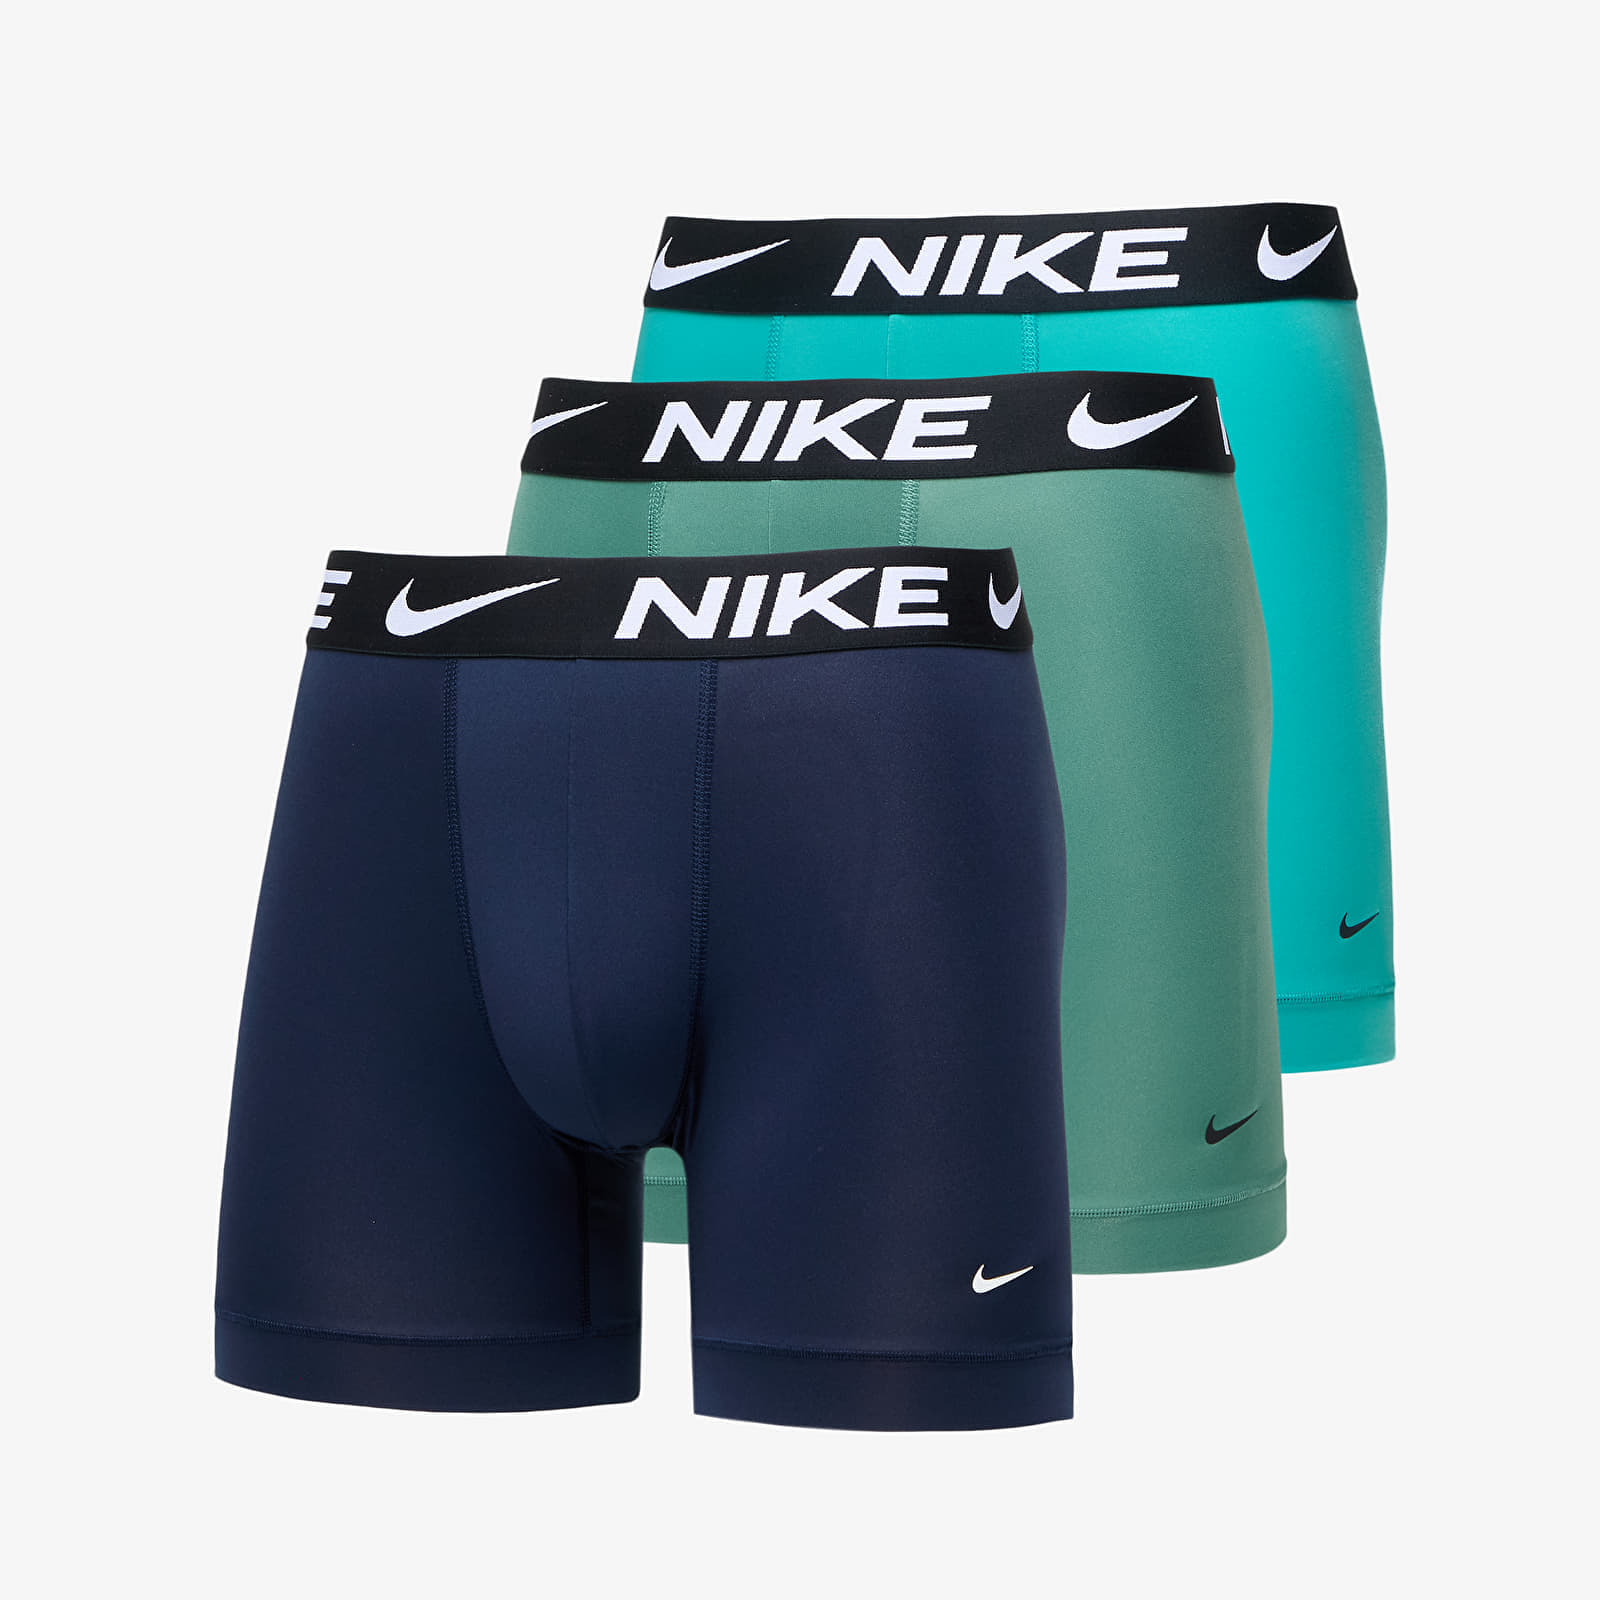 Nike Boxer Brief 3-Pack Multicolor